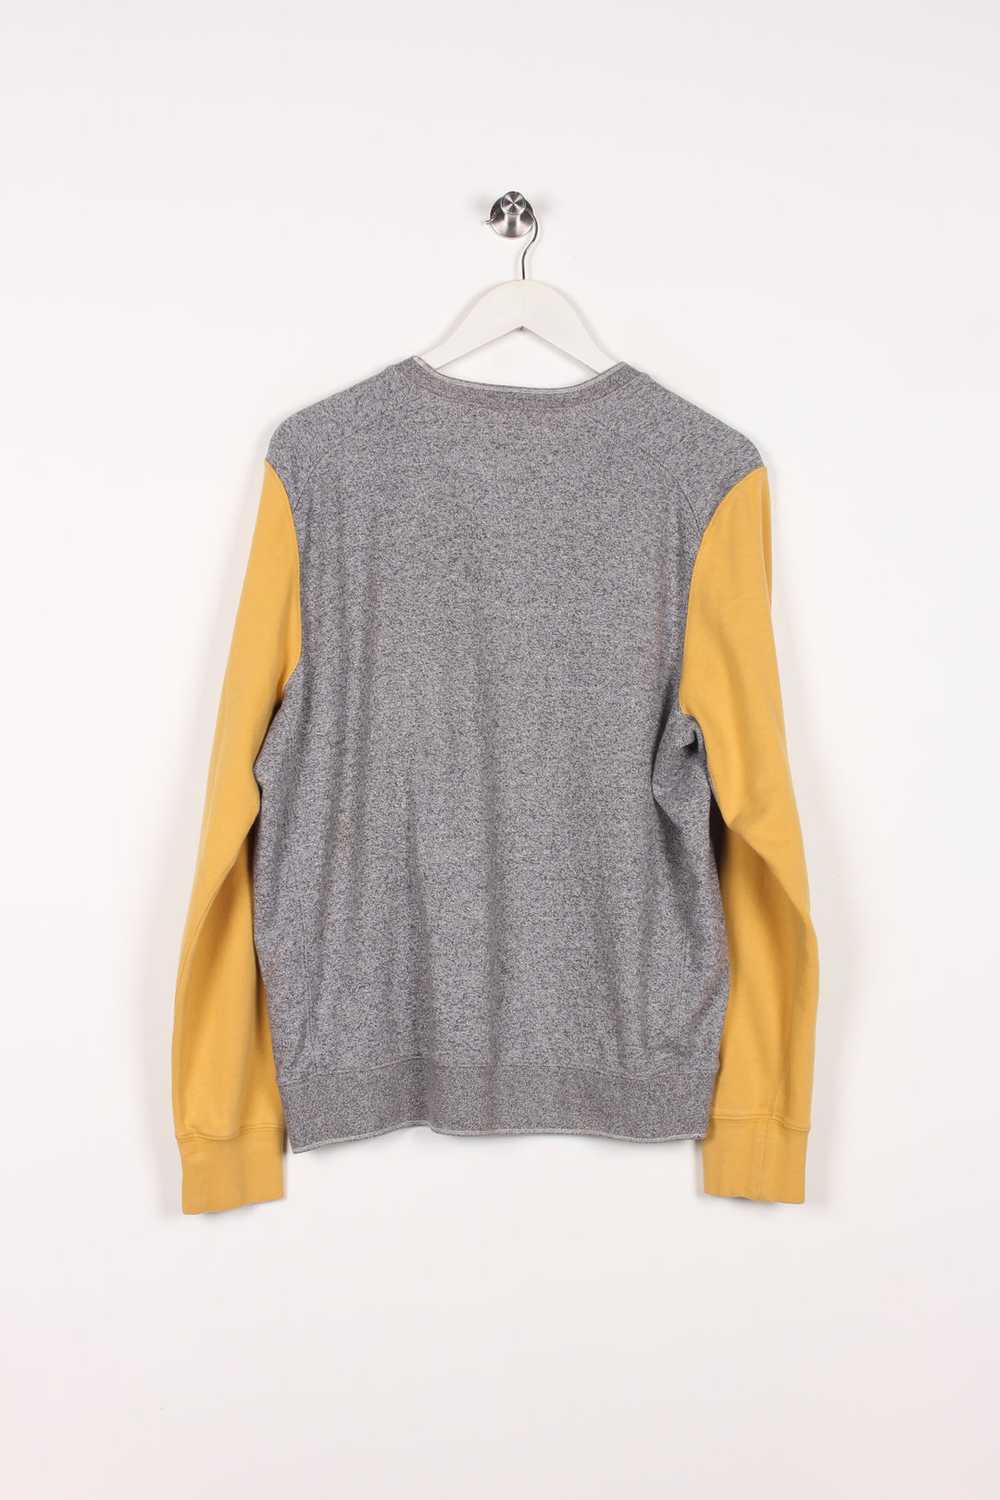 00's Nike Sweatshirt Grey/Yellow Medium - image 4